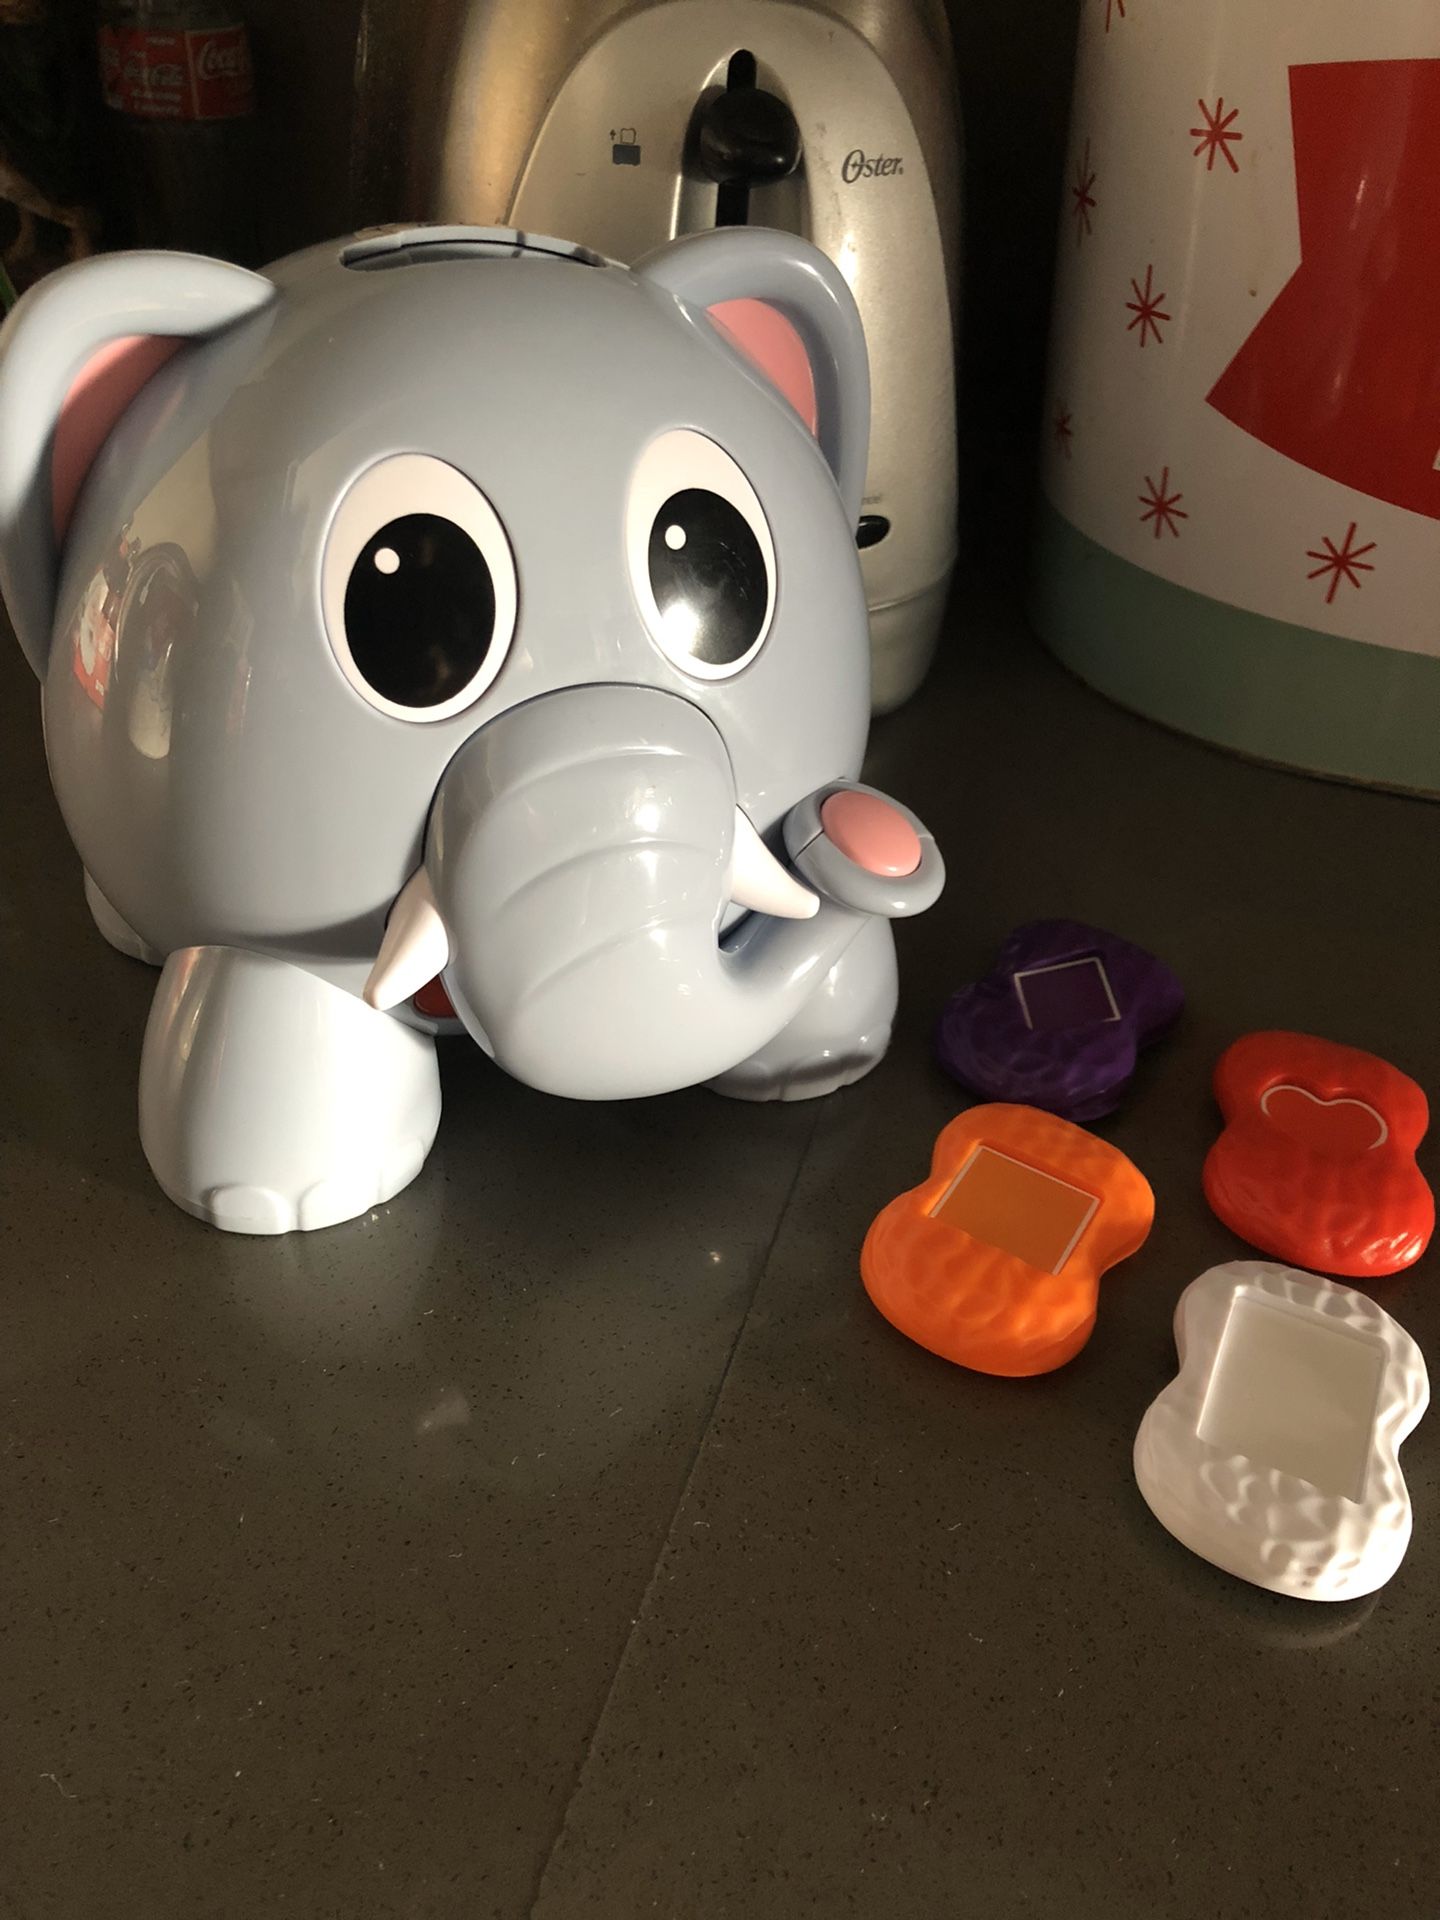 Talking elephant toy